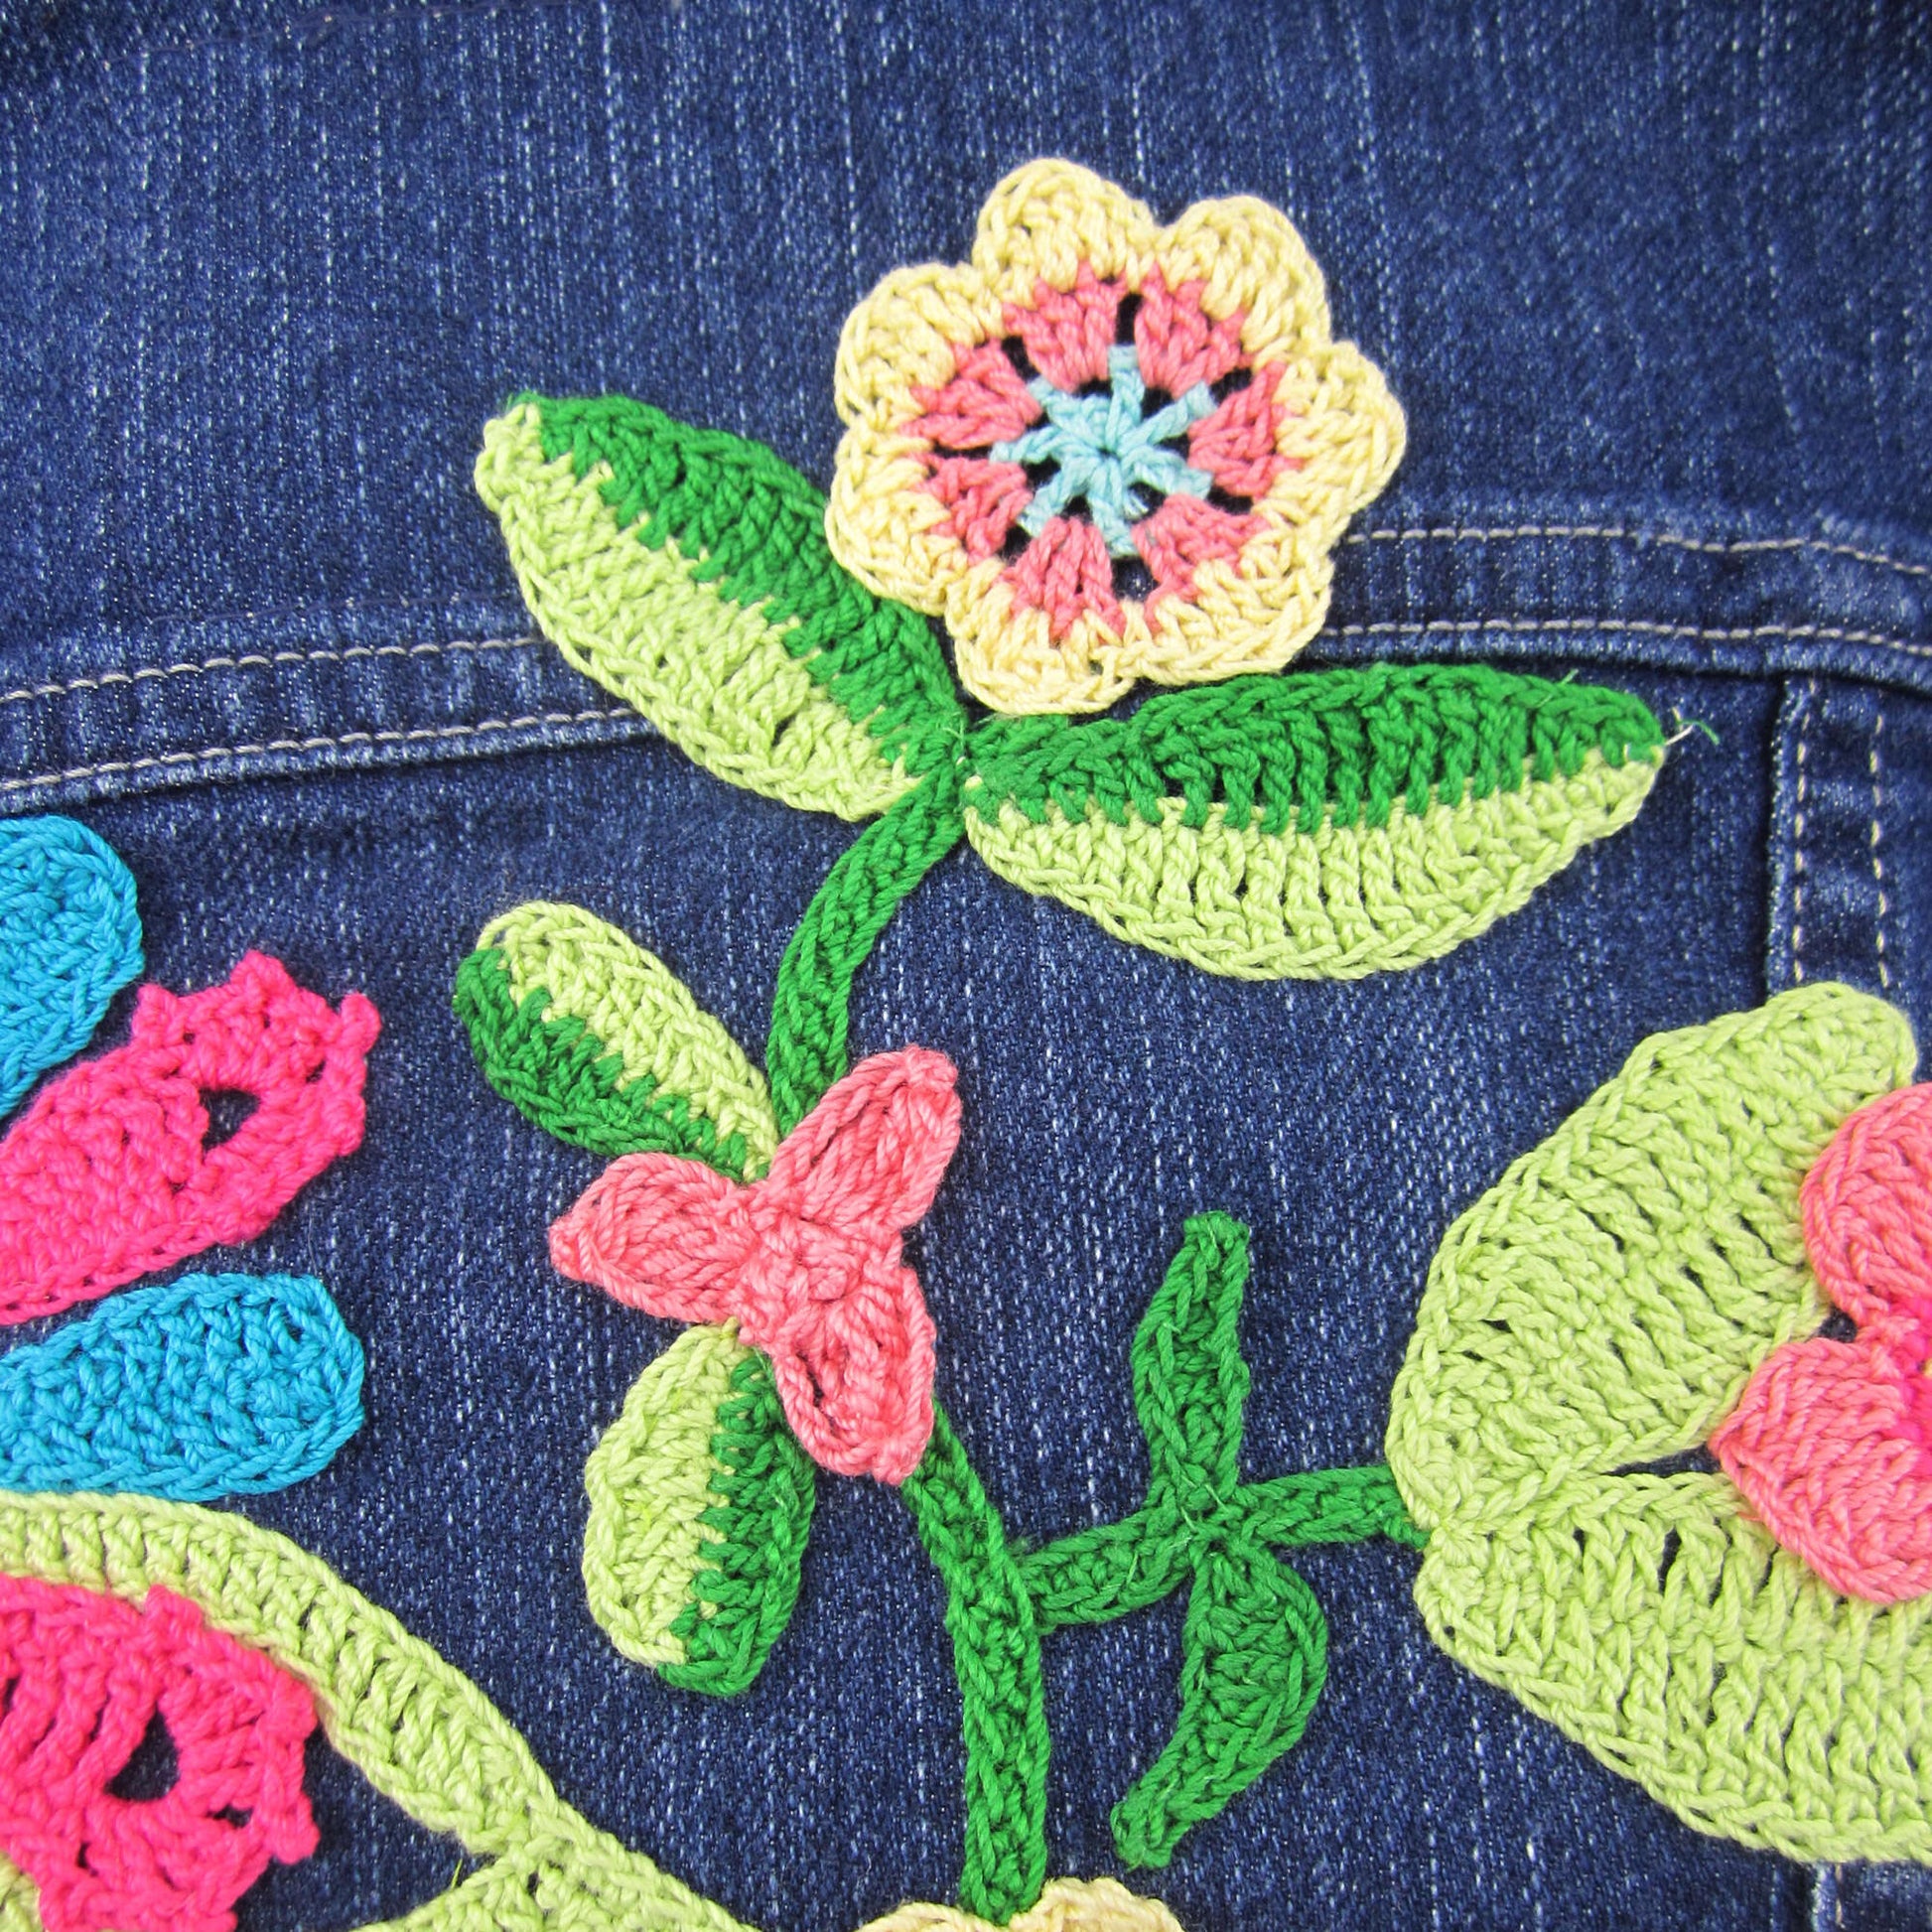 Free Aunt Lydia's Be-Flowered Denim Jacket Crochet Pattern